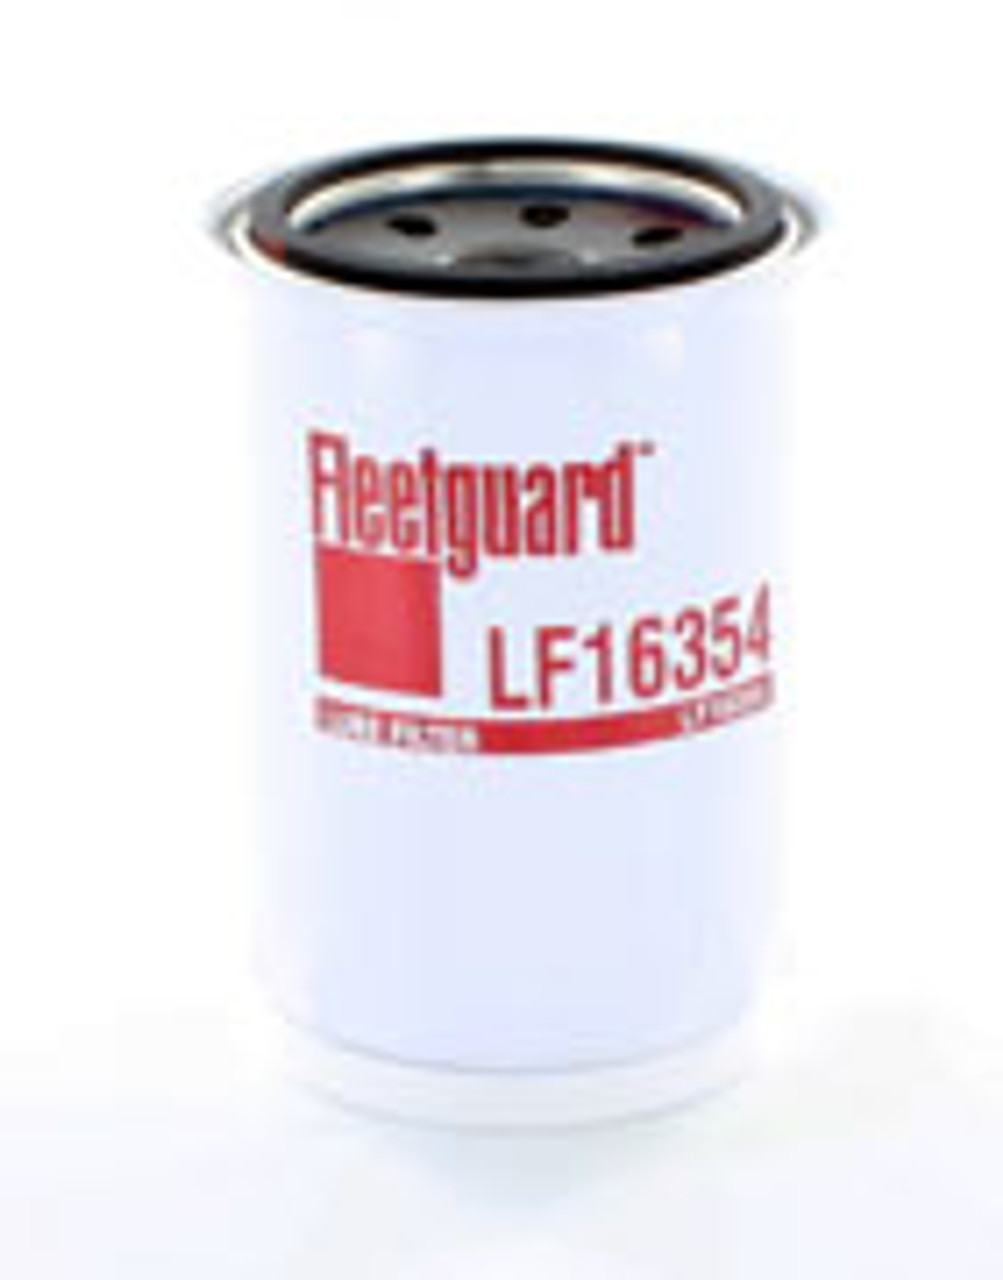 LF16354: Fleetguard Oil Filter